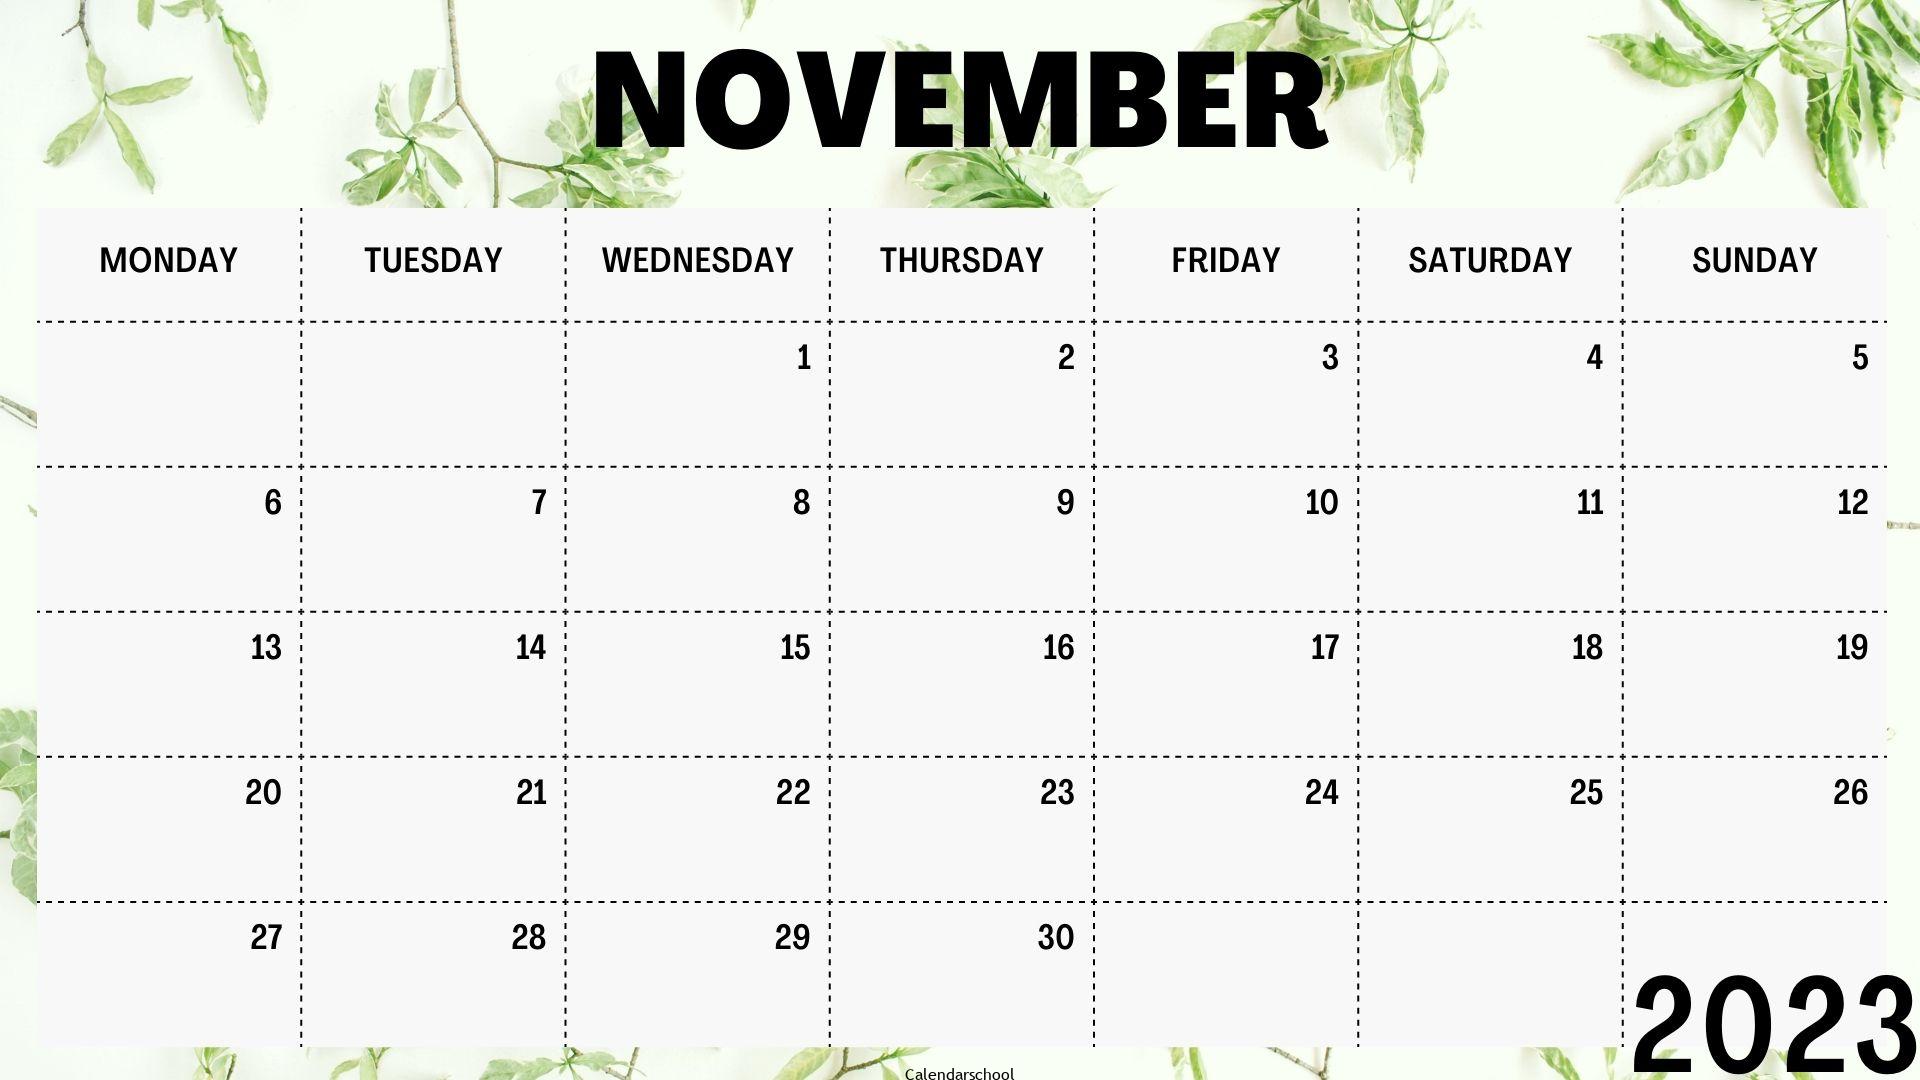 November Calendar 2023 With Holidays